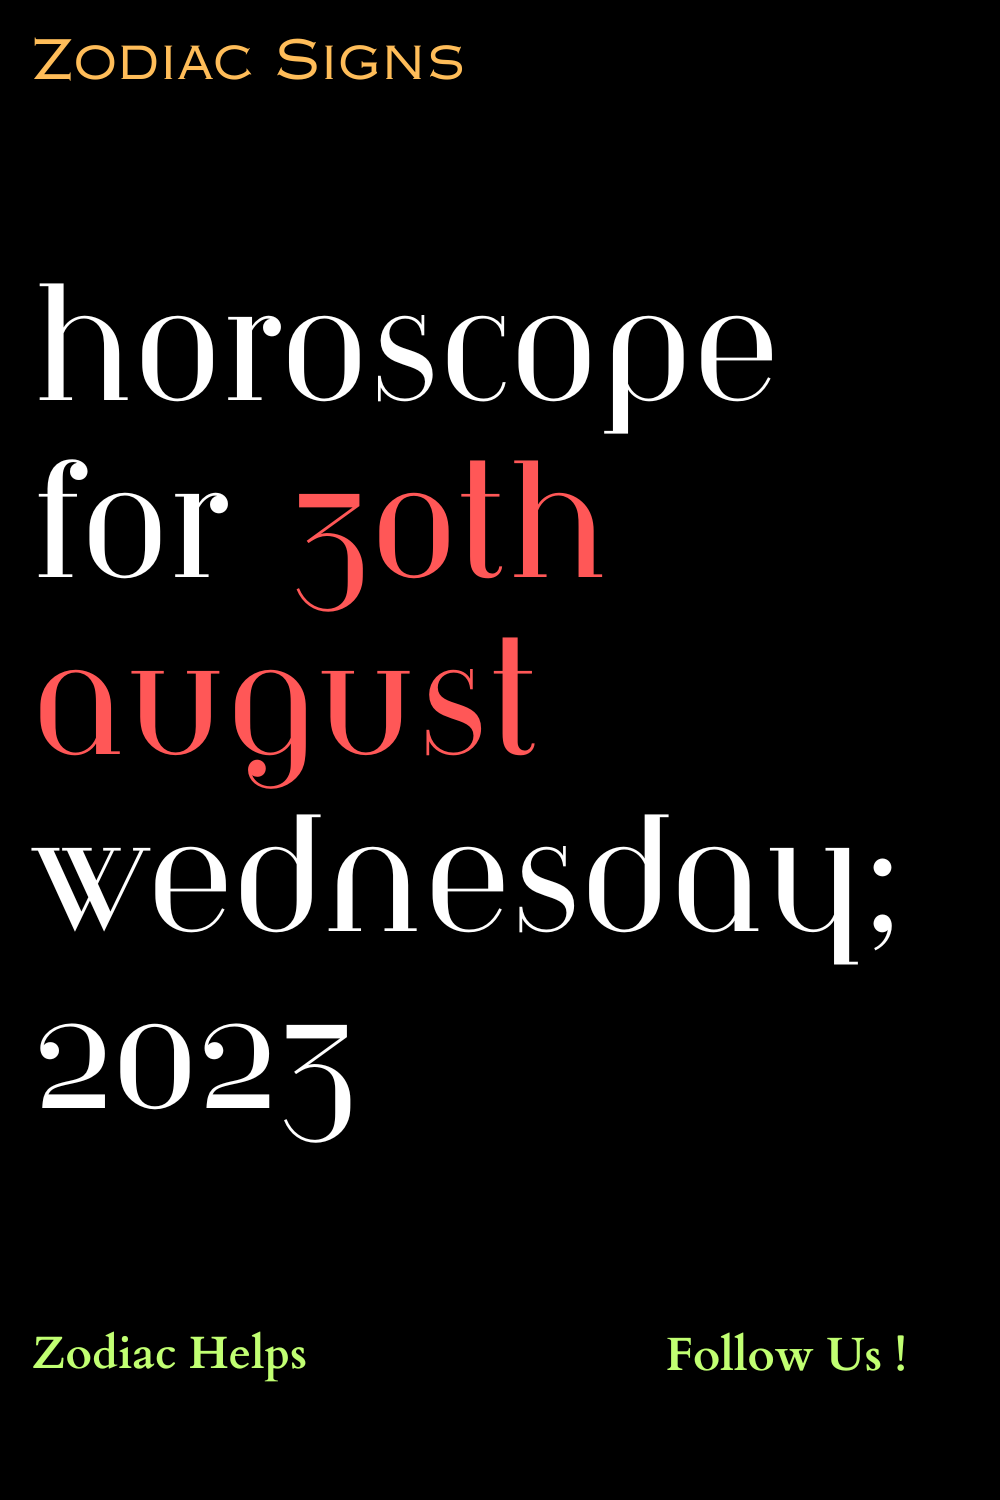 Horoscope for 30th August Wednesday, 2023